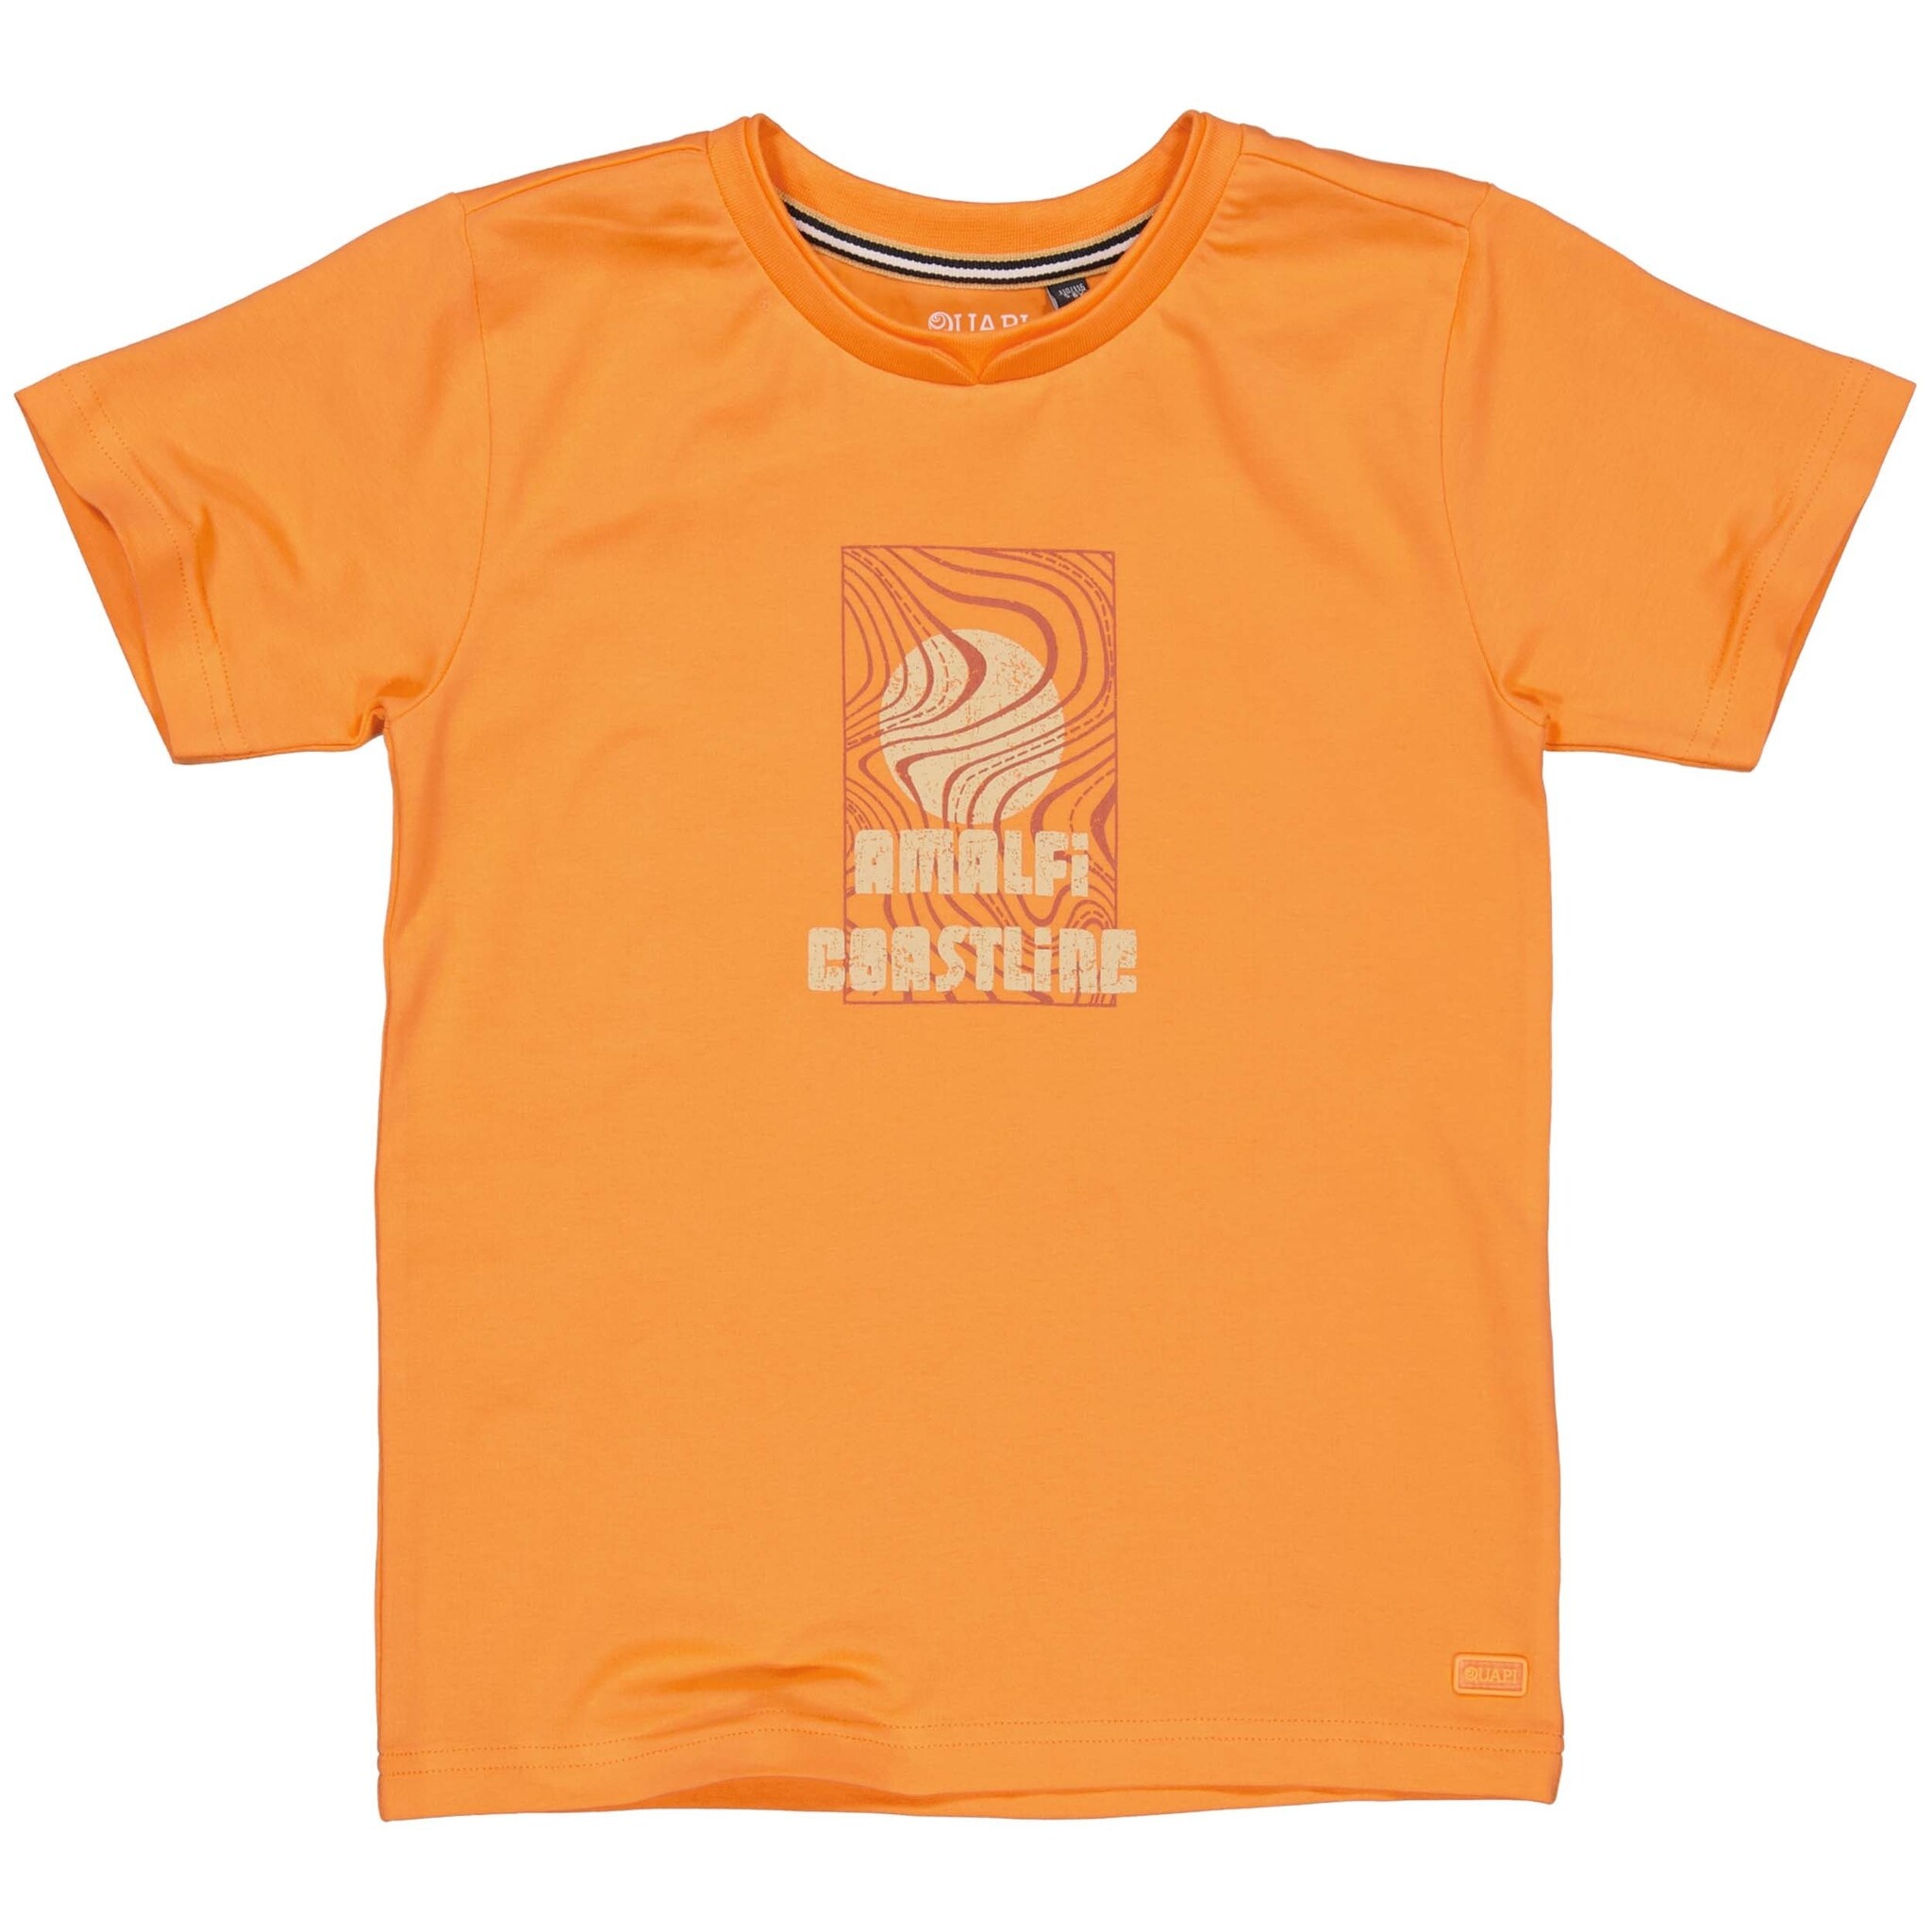 Quapi Jongens t-shirt - Benne - Oranje